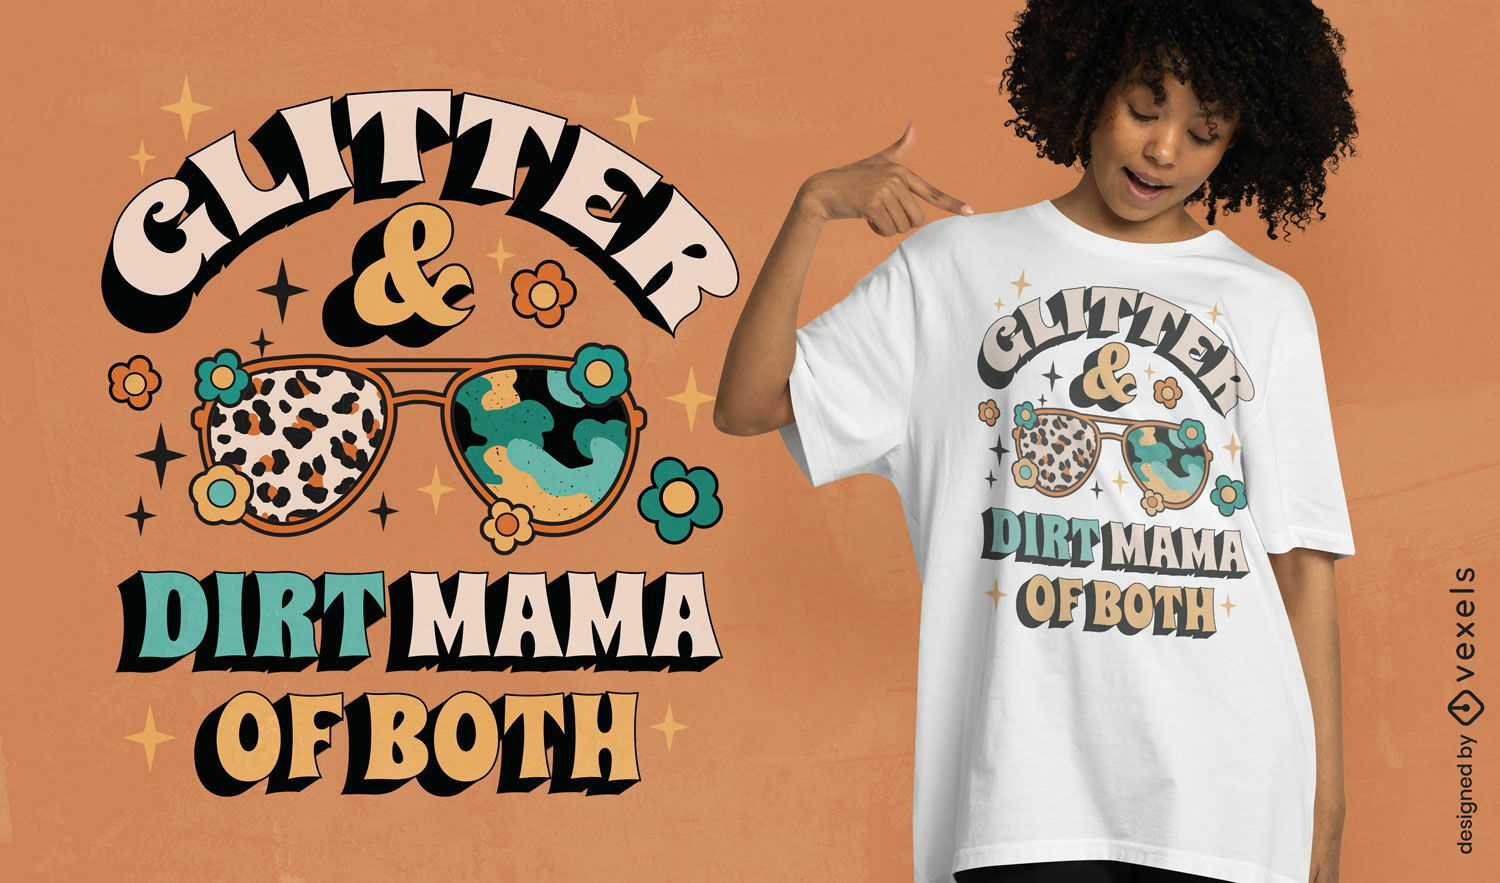 Diseño de camiseta Glitter & Dirt Mama de ambos.